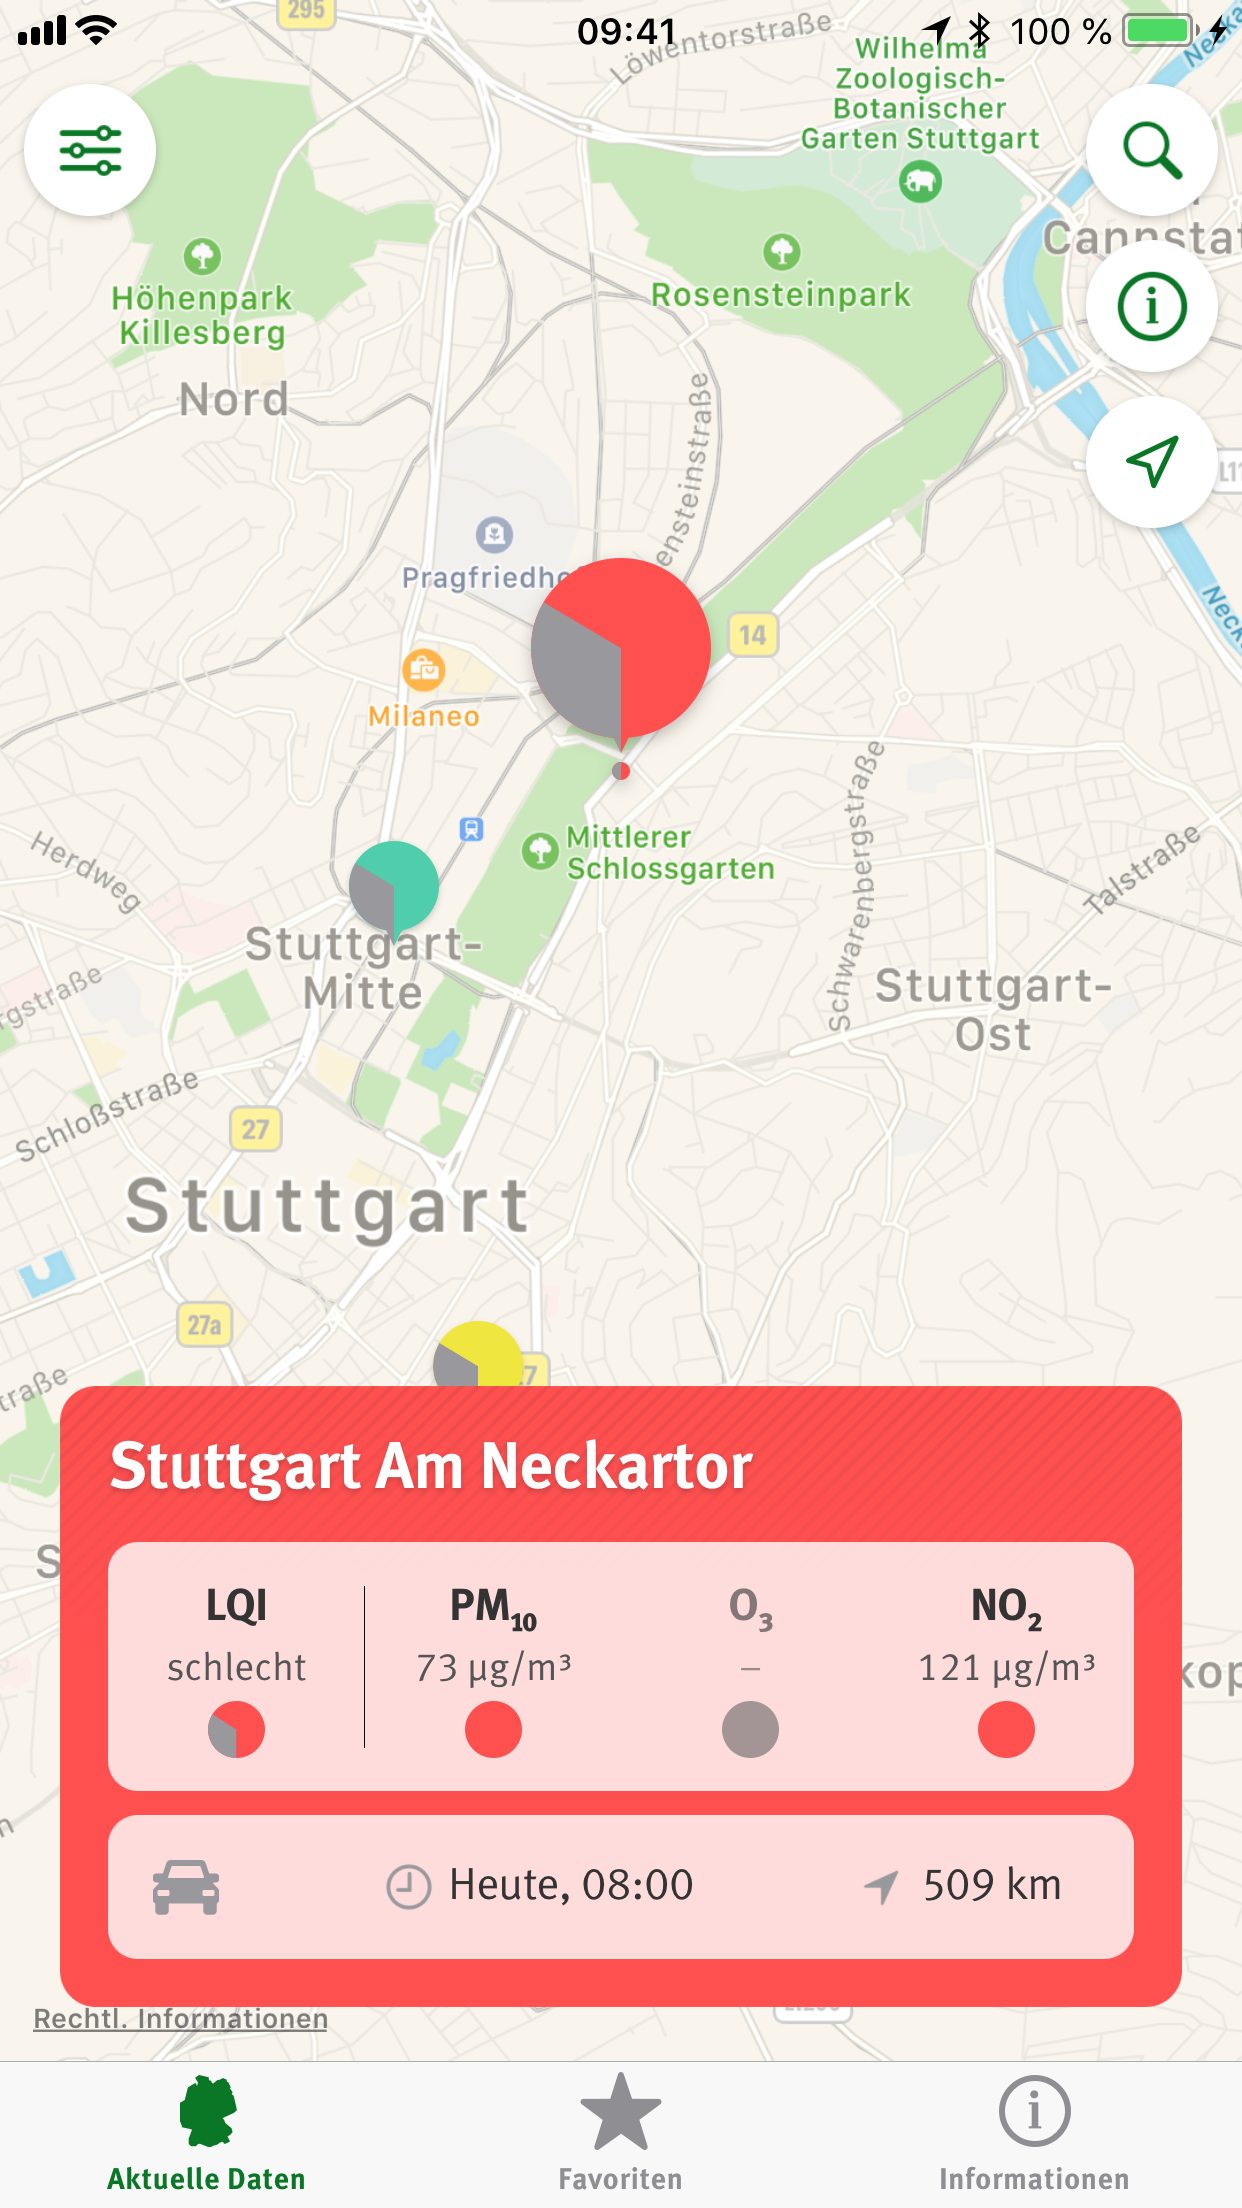 UBA Luftqualität App – Kartenansicht